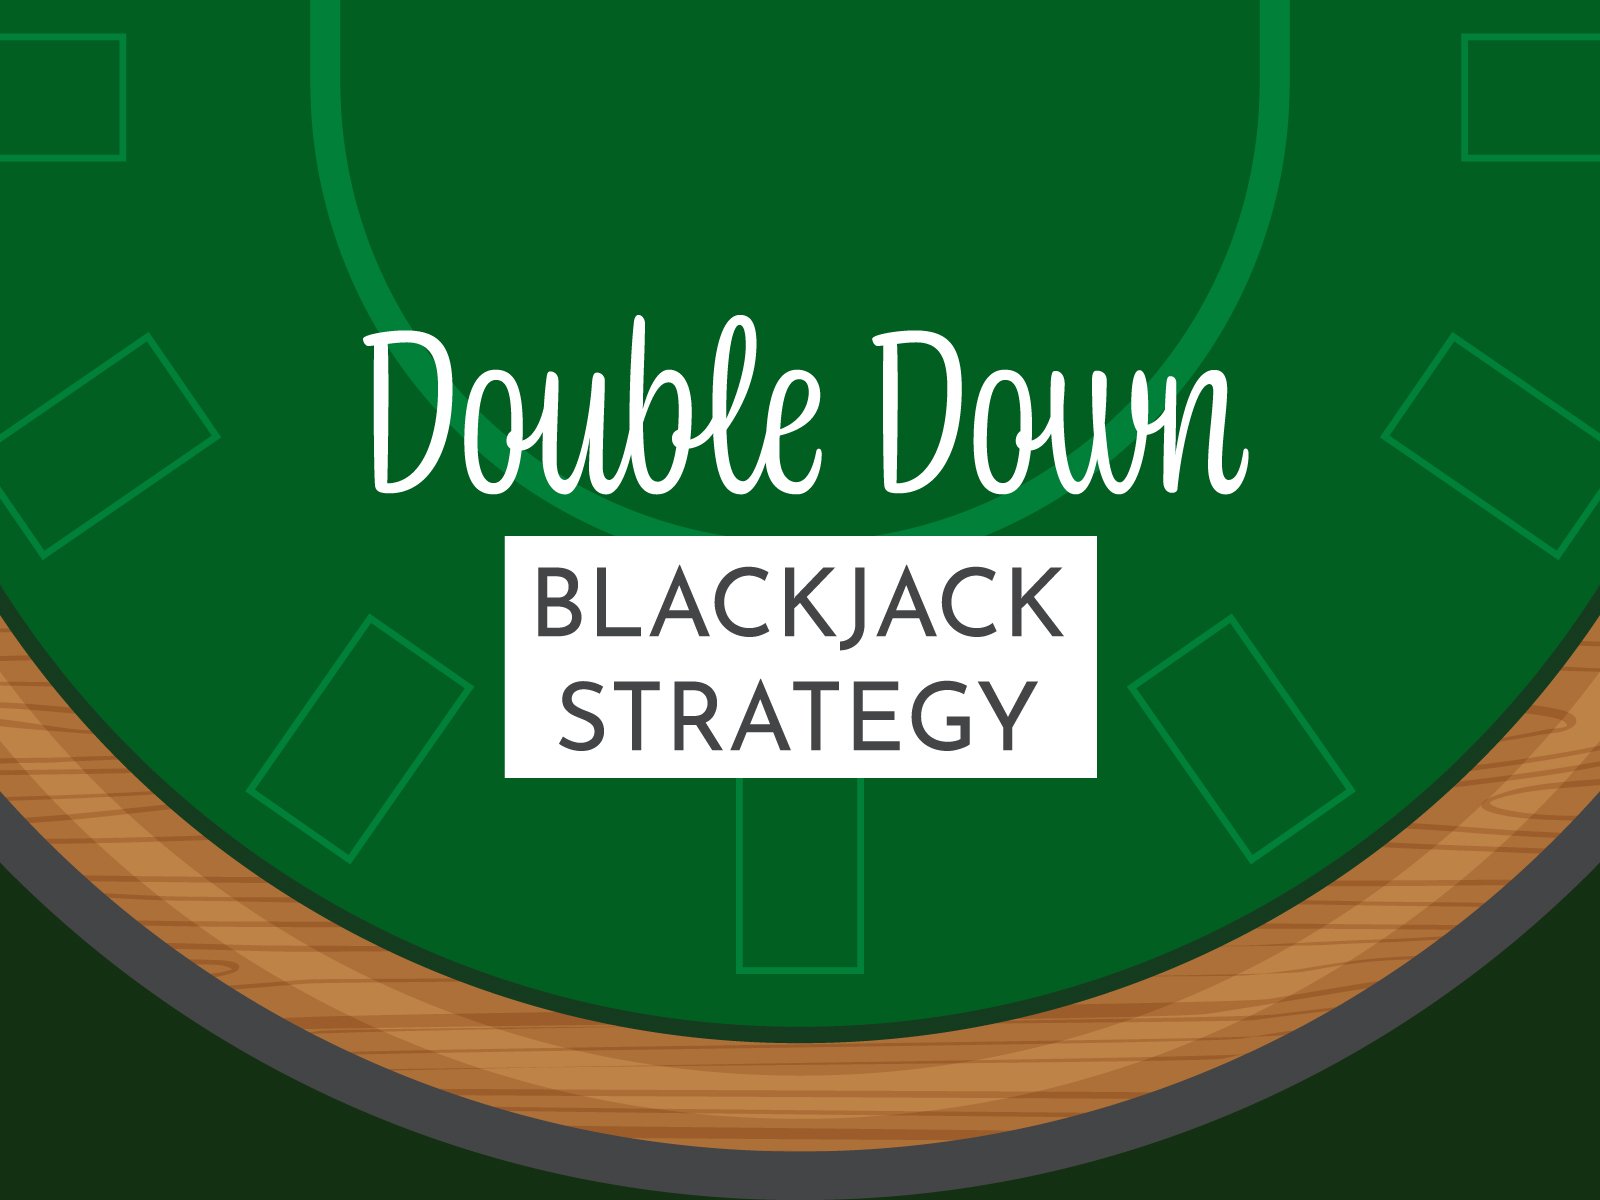 Double down blackjack